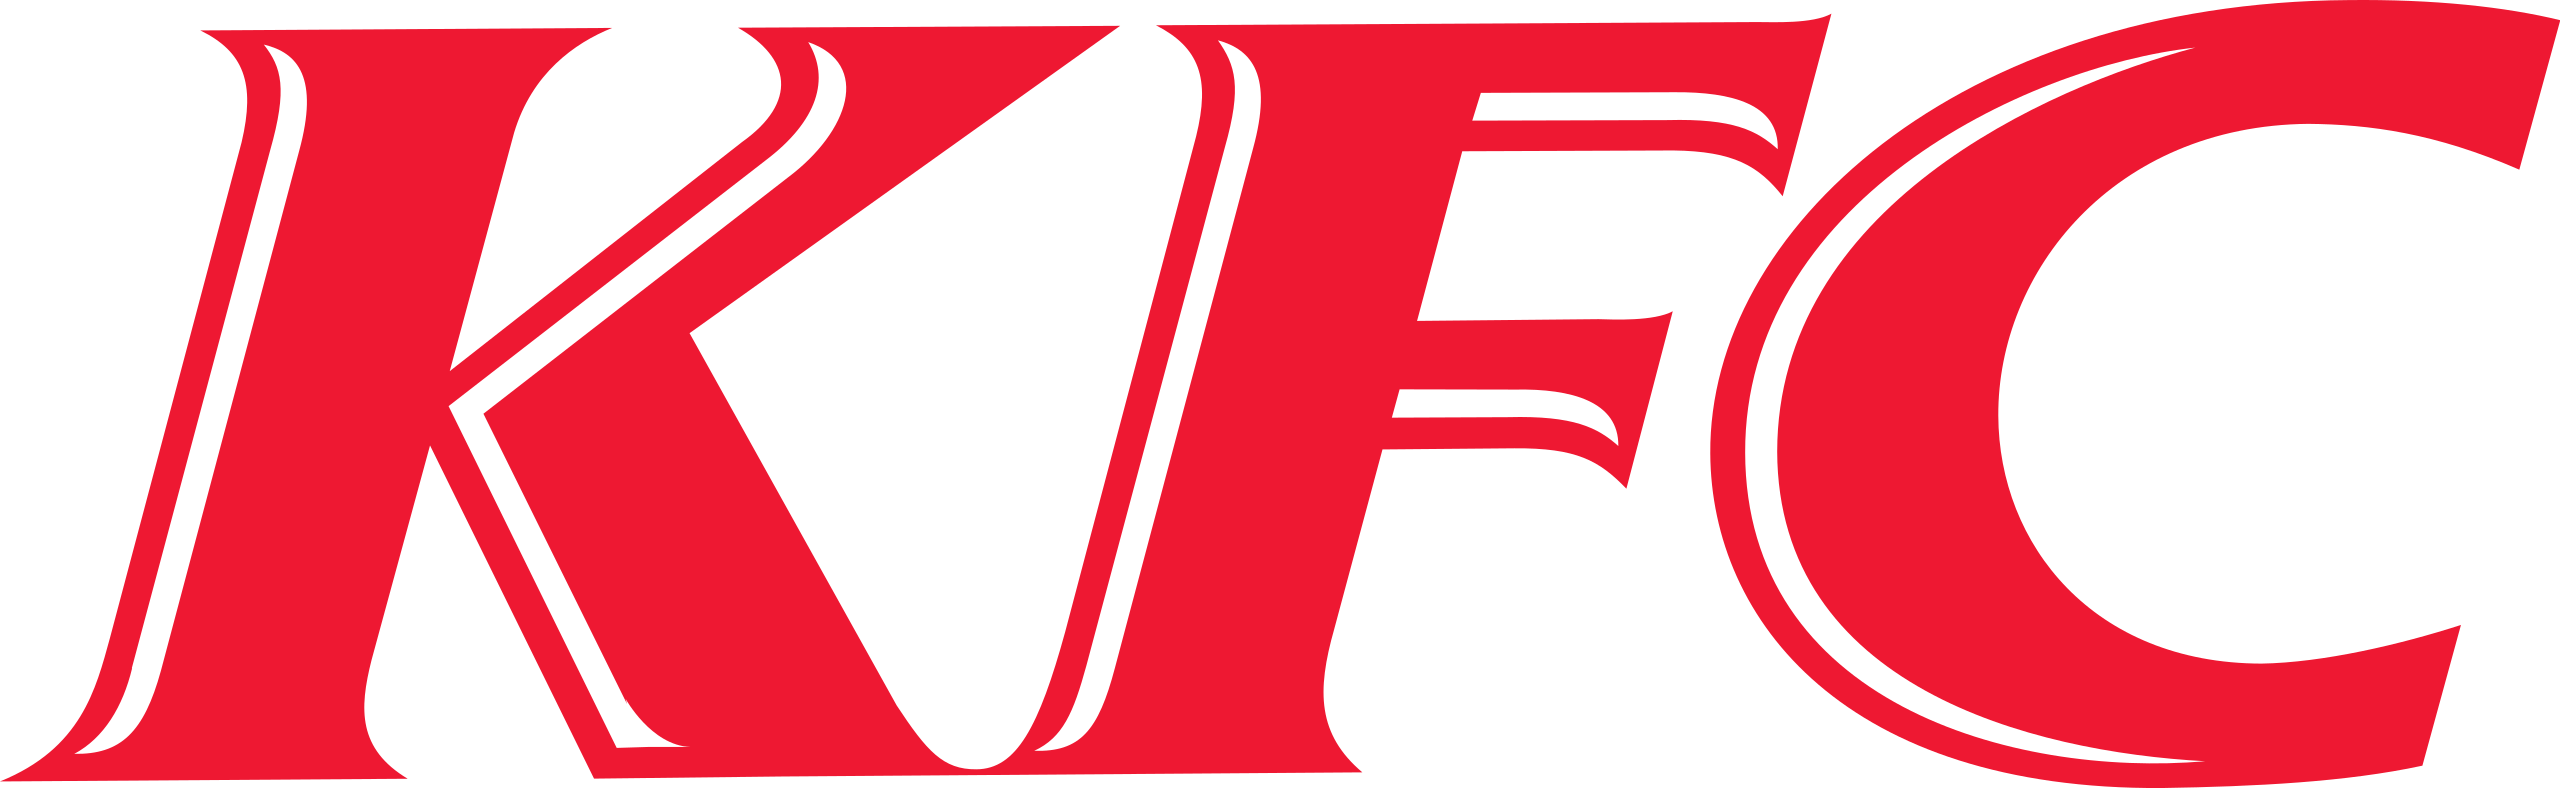 Plik Kfc Logo Svg Wikipedia Wolna Encyklopedia